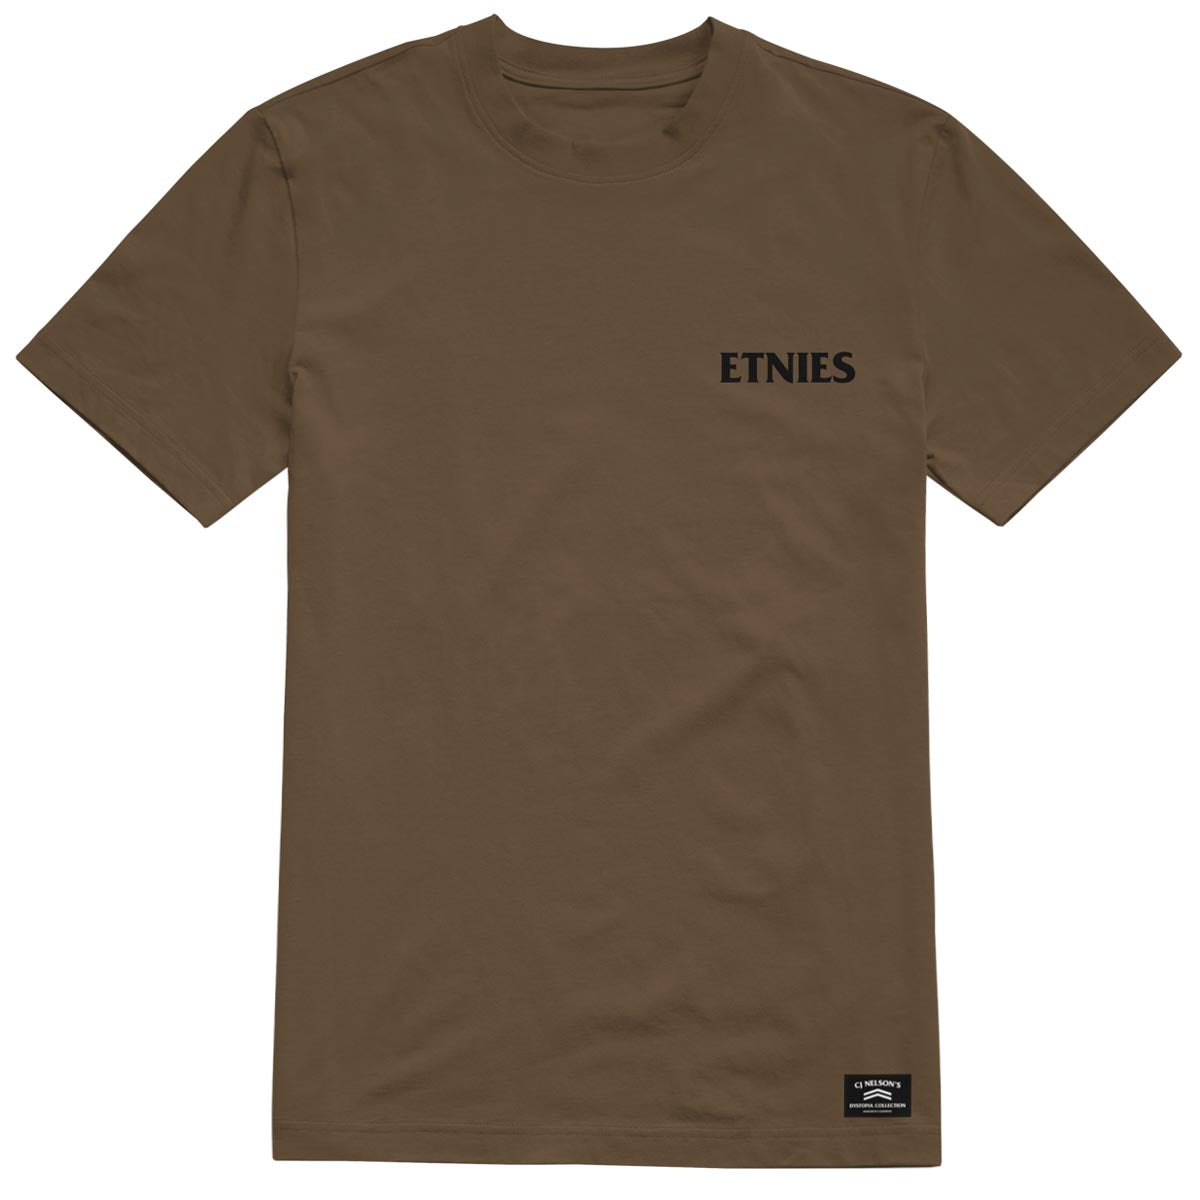 Etnies Dystopia Font T-Shirt - Brown image 1